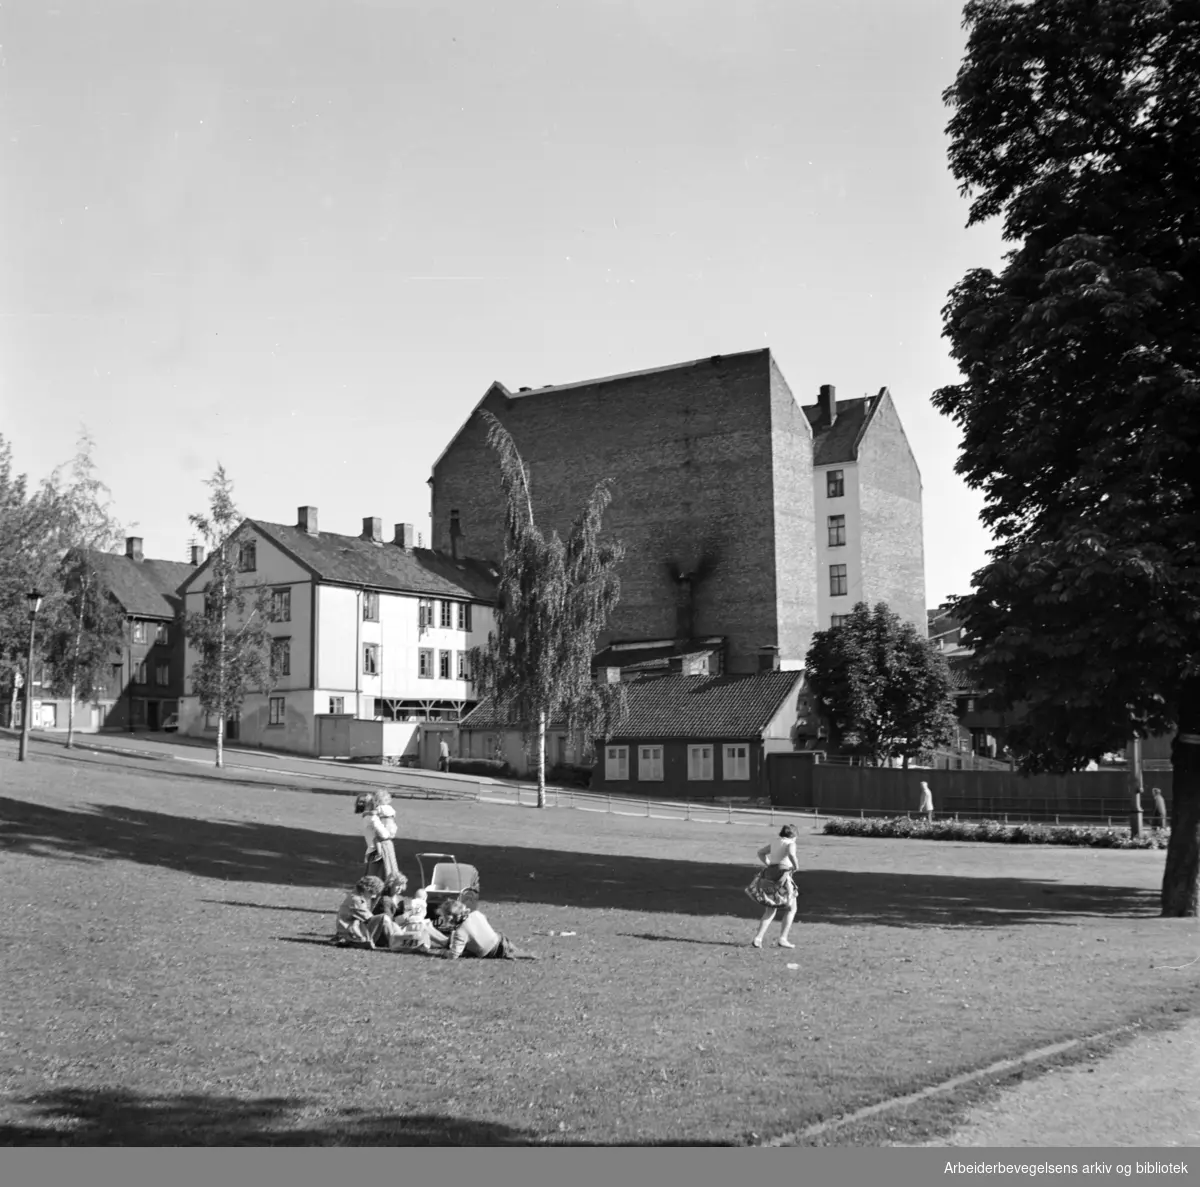 Grünerhagen og Nordre gate. August 1956.